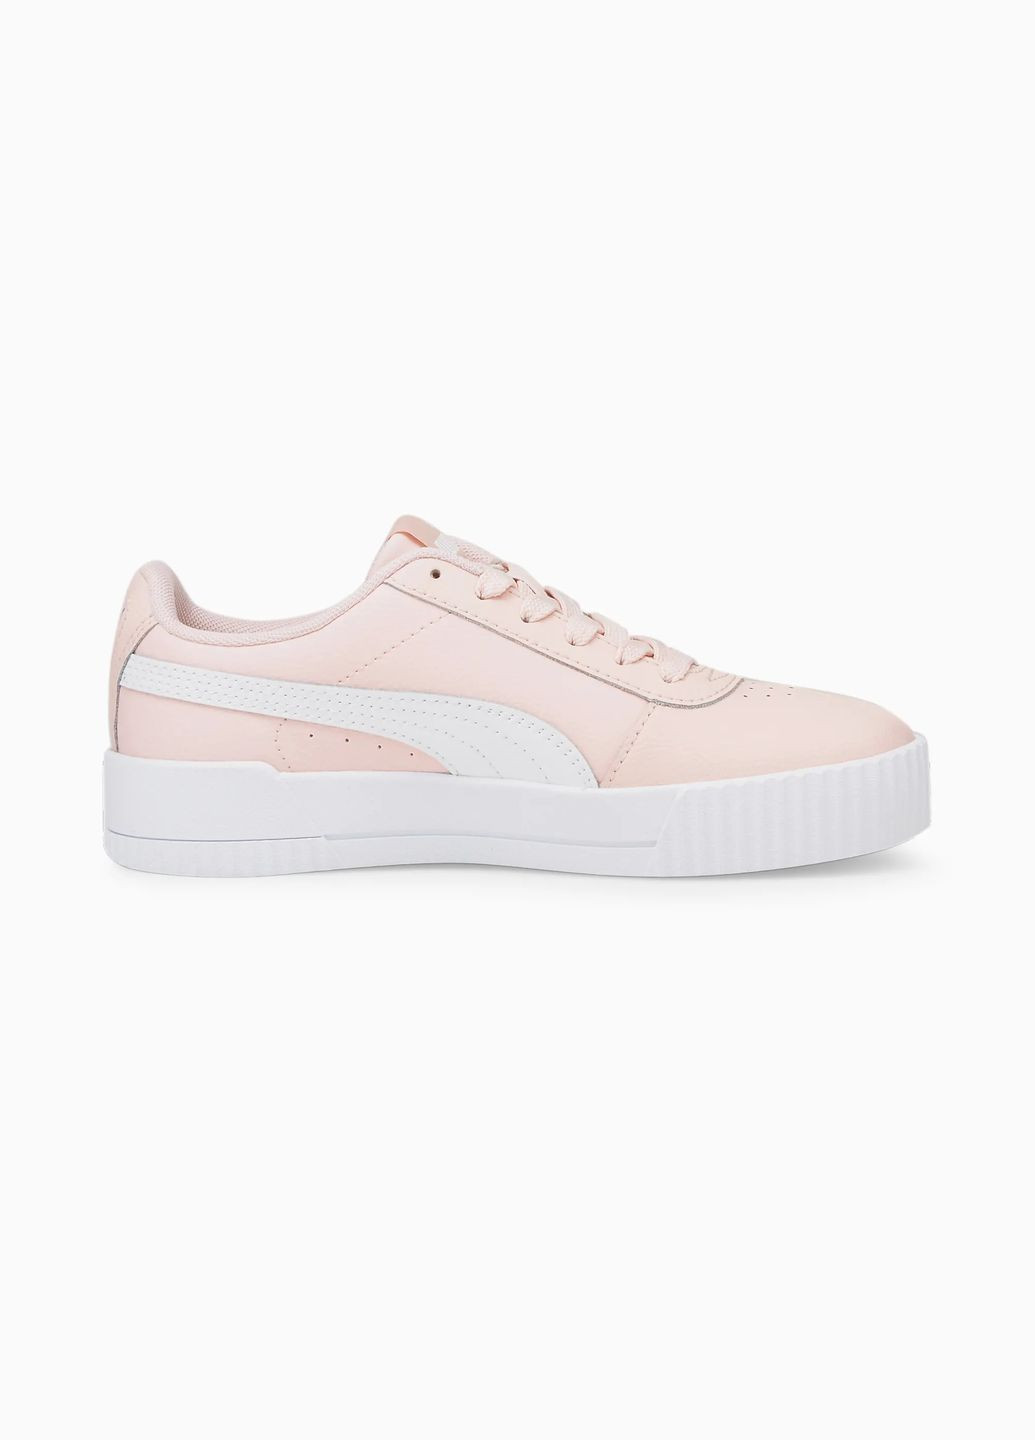 Розовые демисезонные кроссовки kids carina l chalk pink/white р. 4/35.5/22см Puma